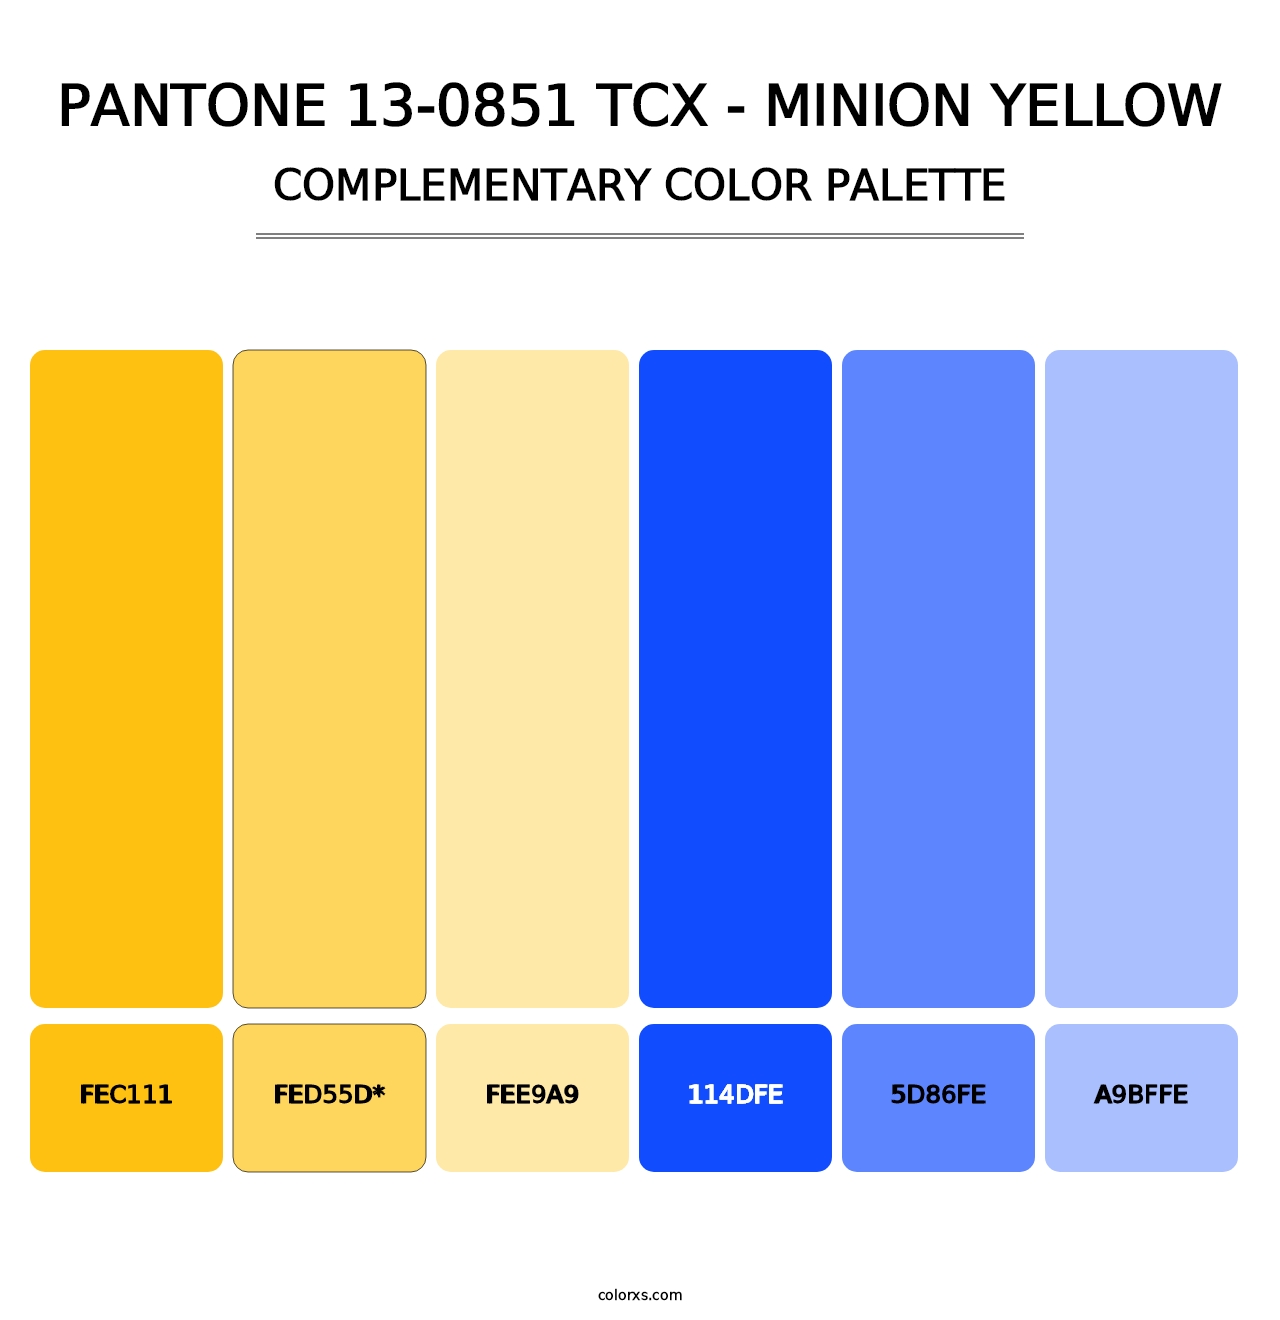 PANTONE 13-0851 TCX - Minion Yellow - Complementary Color Palette